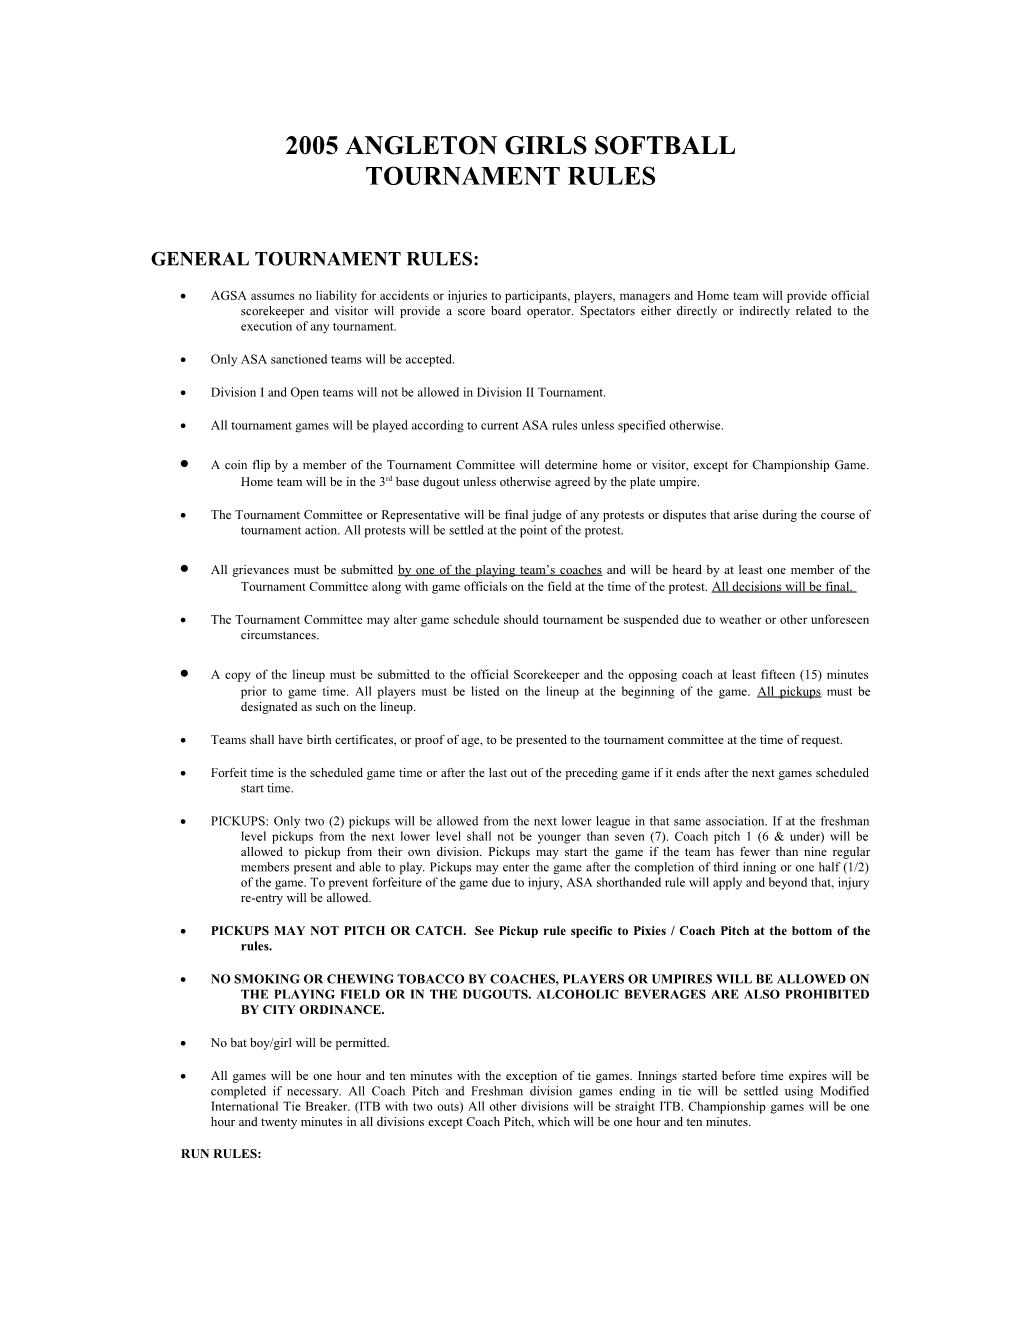 2003 Angleton Girls Softball Tournament Rules